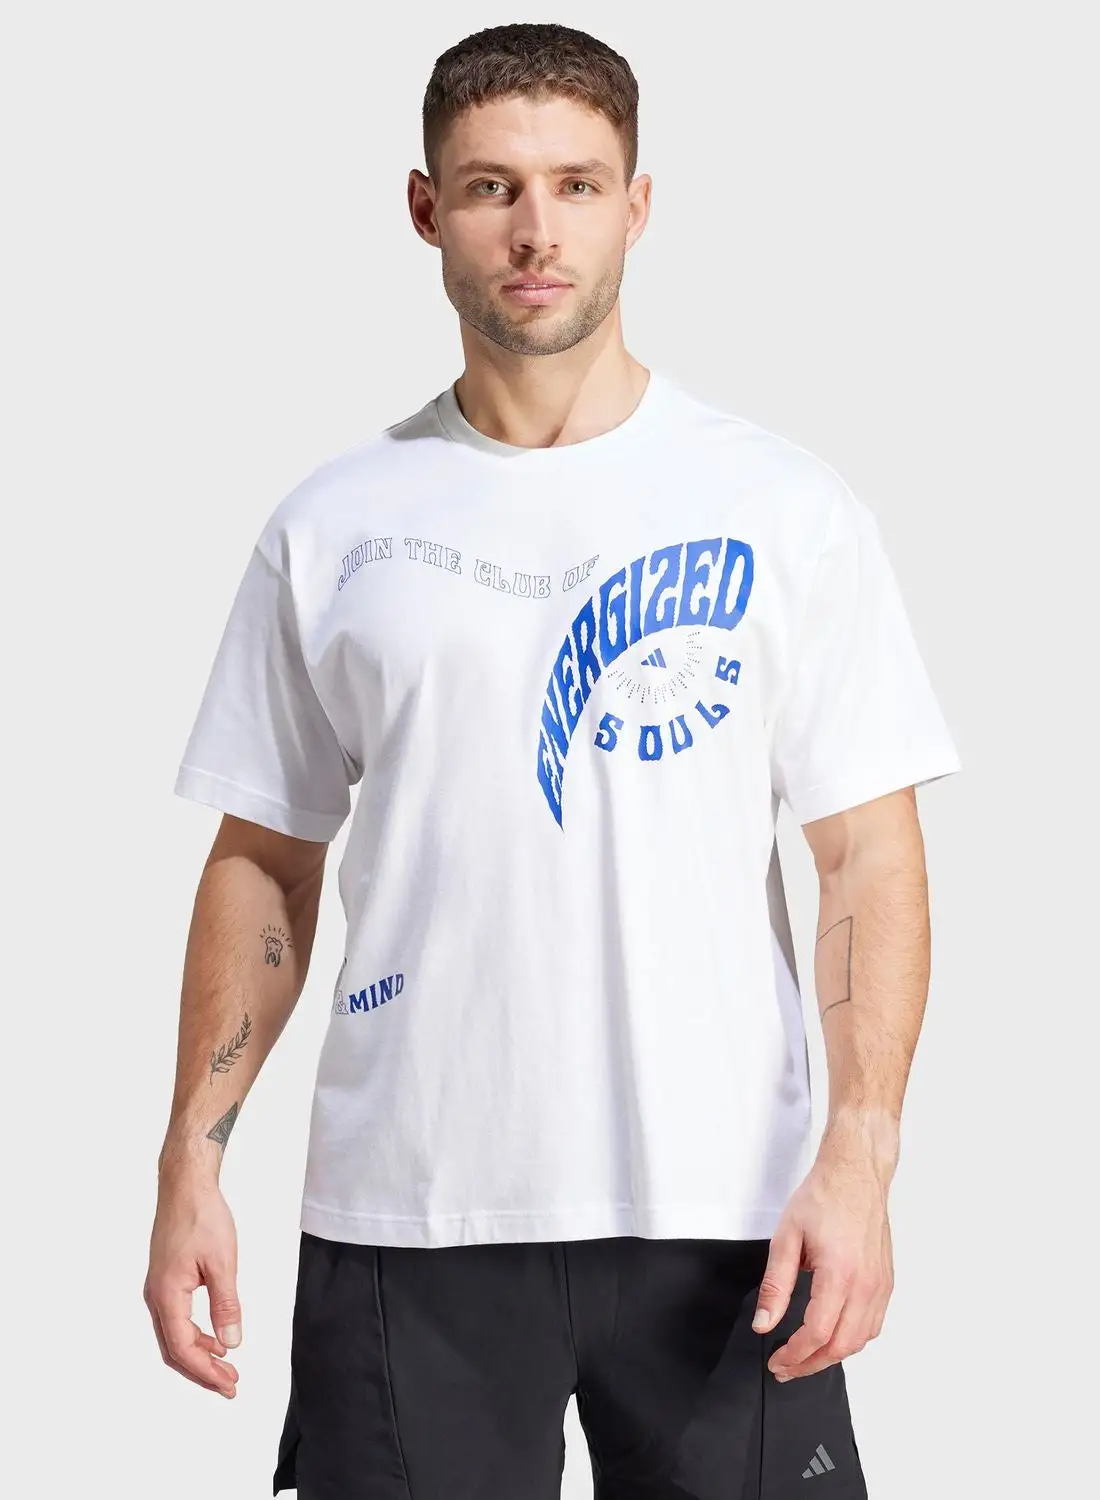 Adidas Yoga T-Shirt